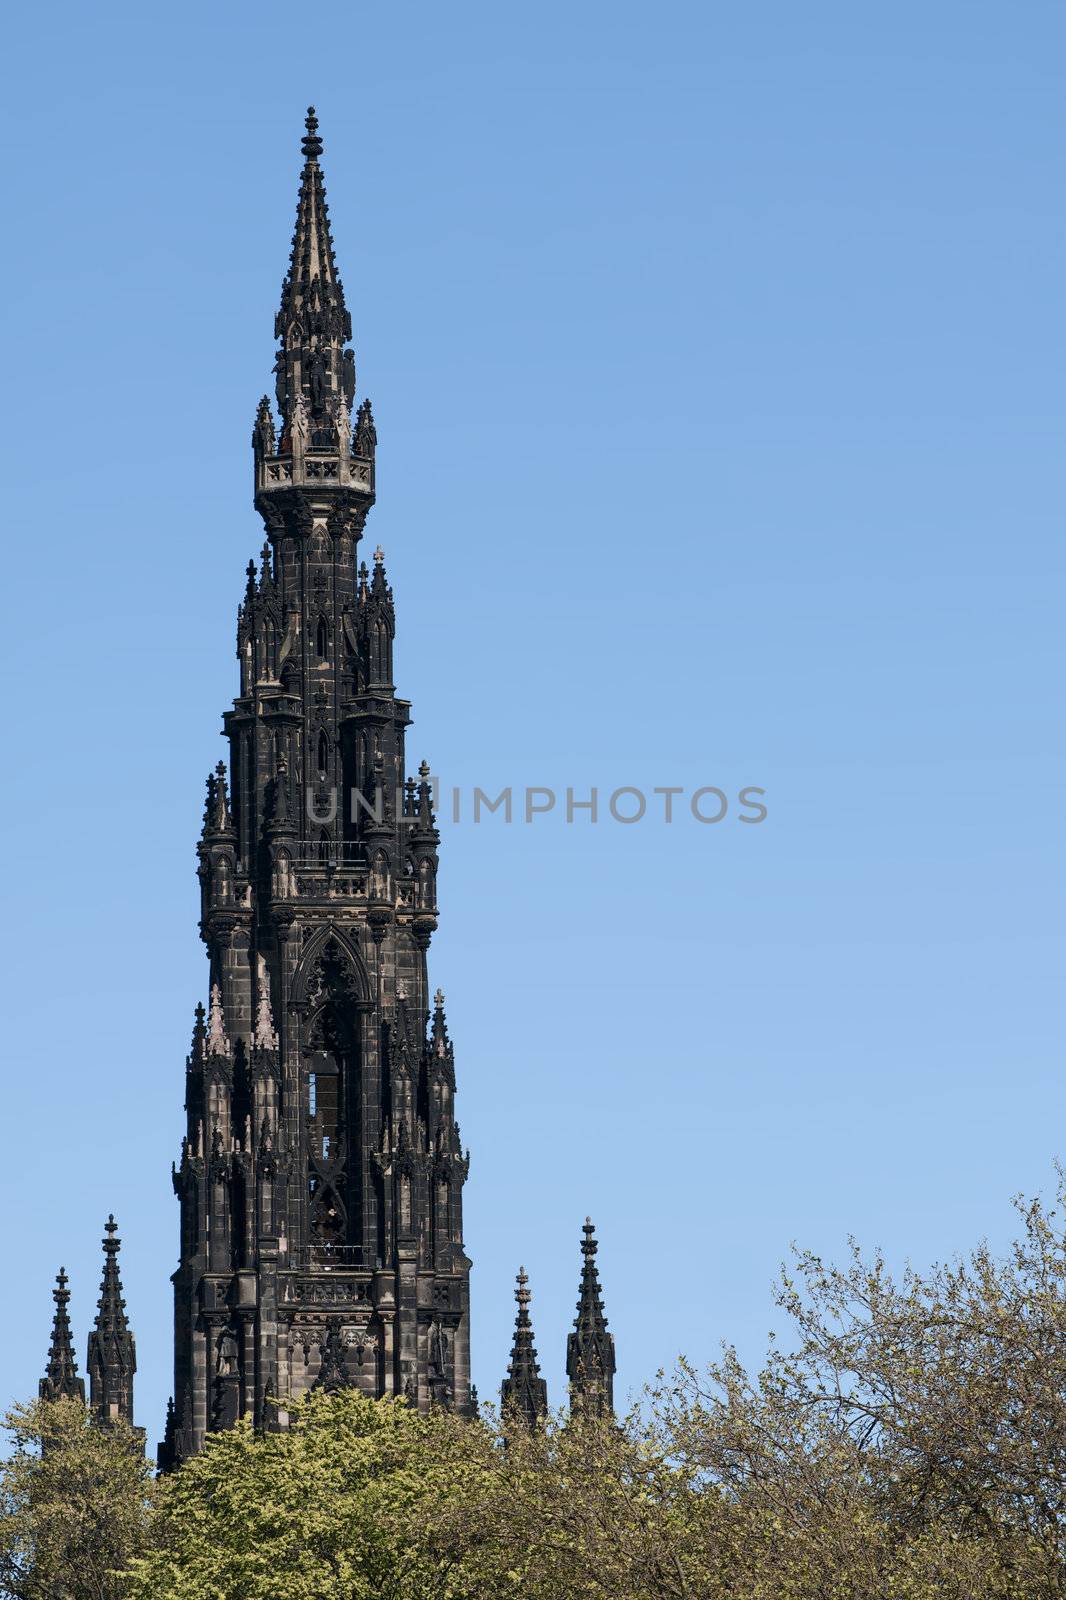 Scott Monument in city of Edinburgh, Scotland.